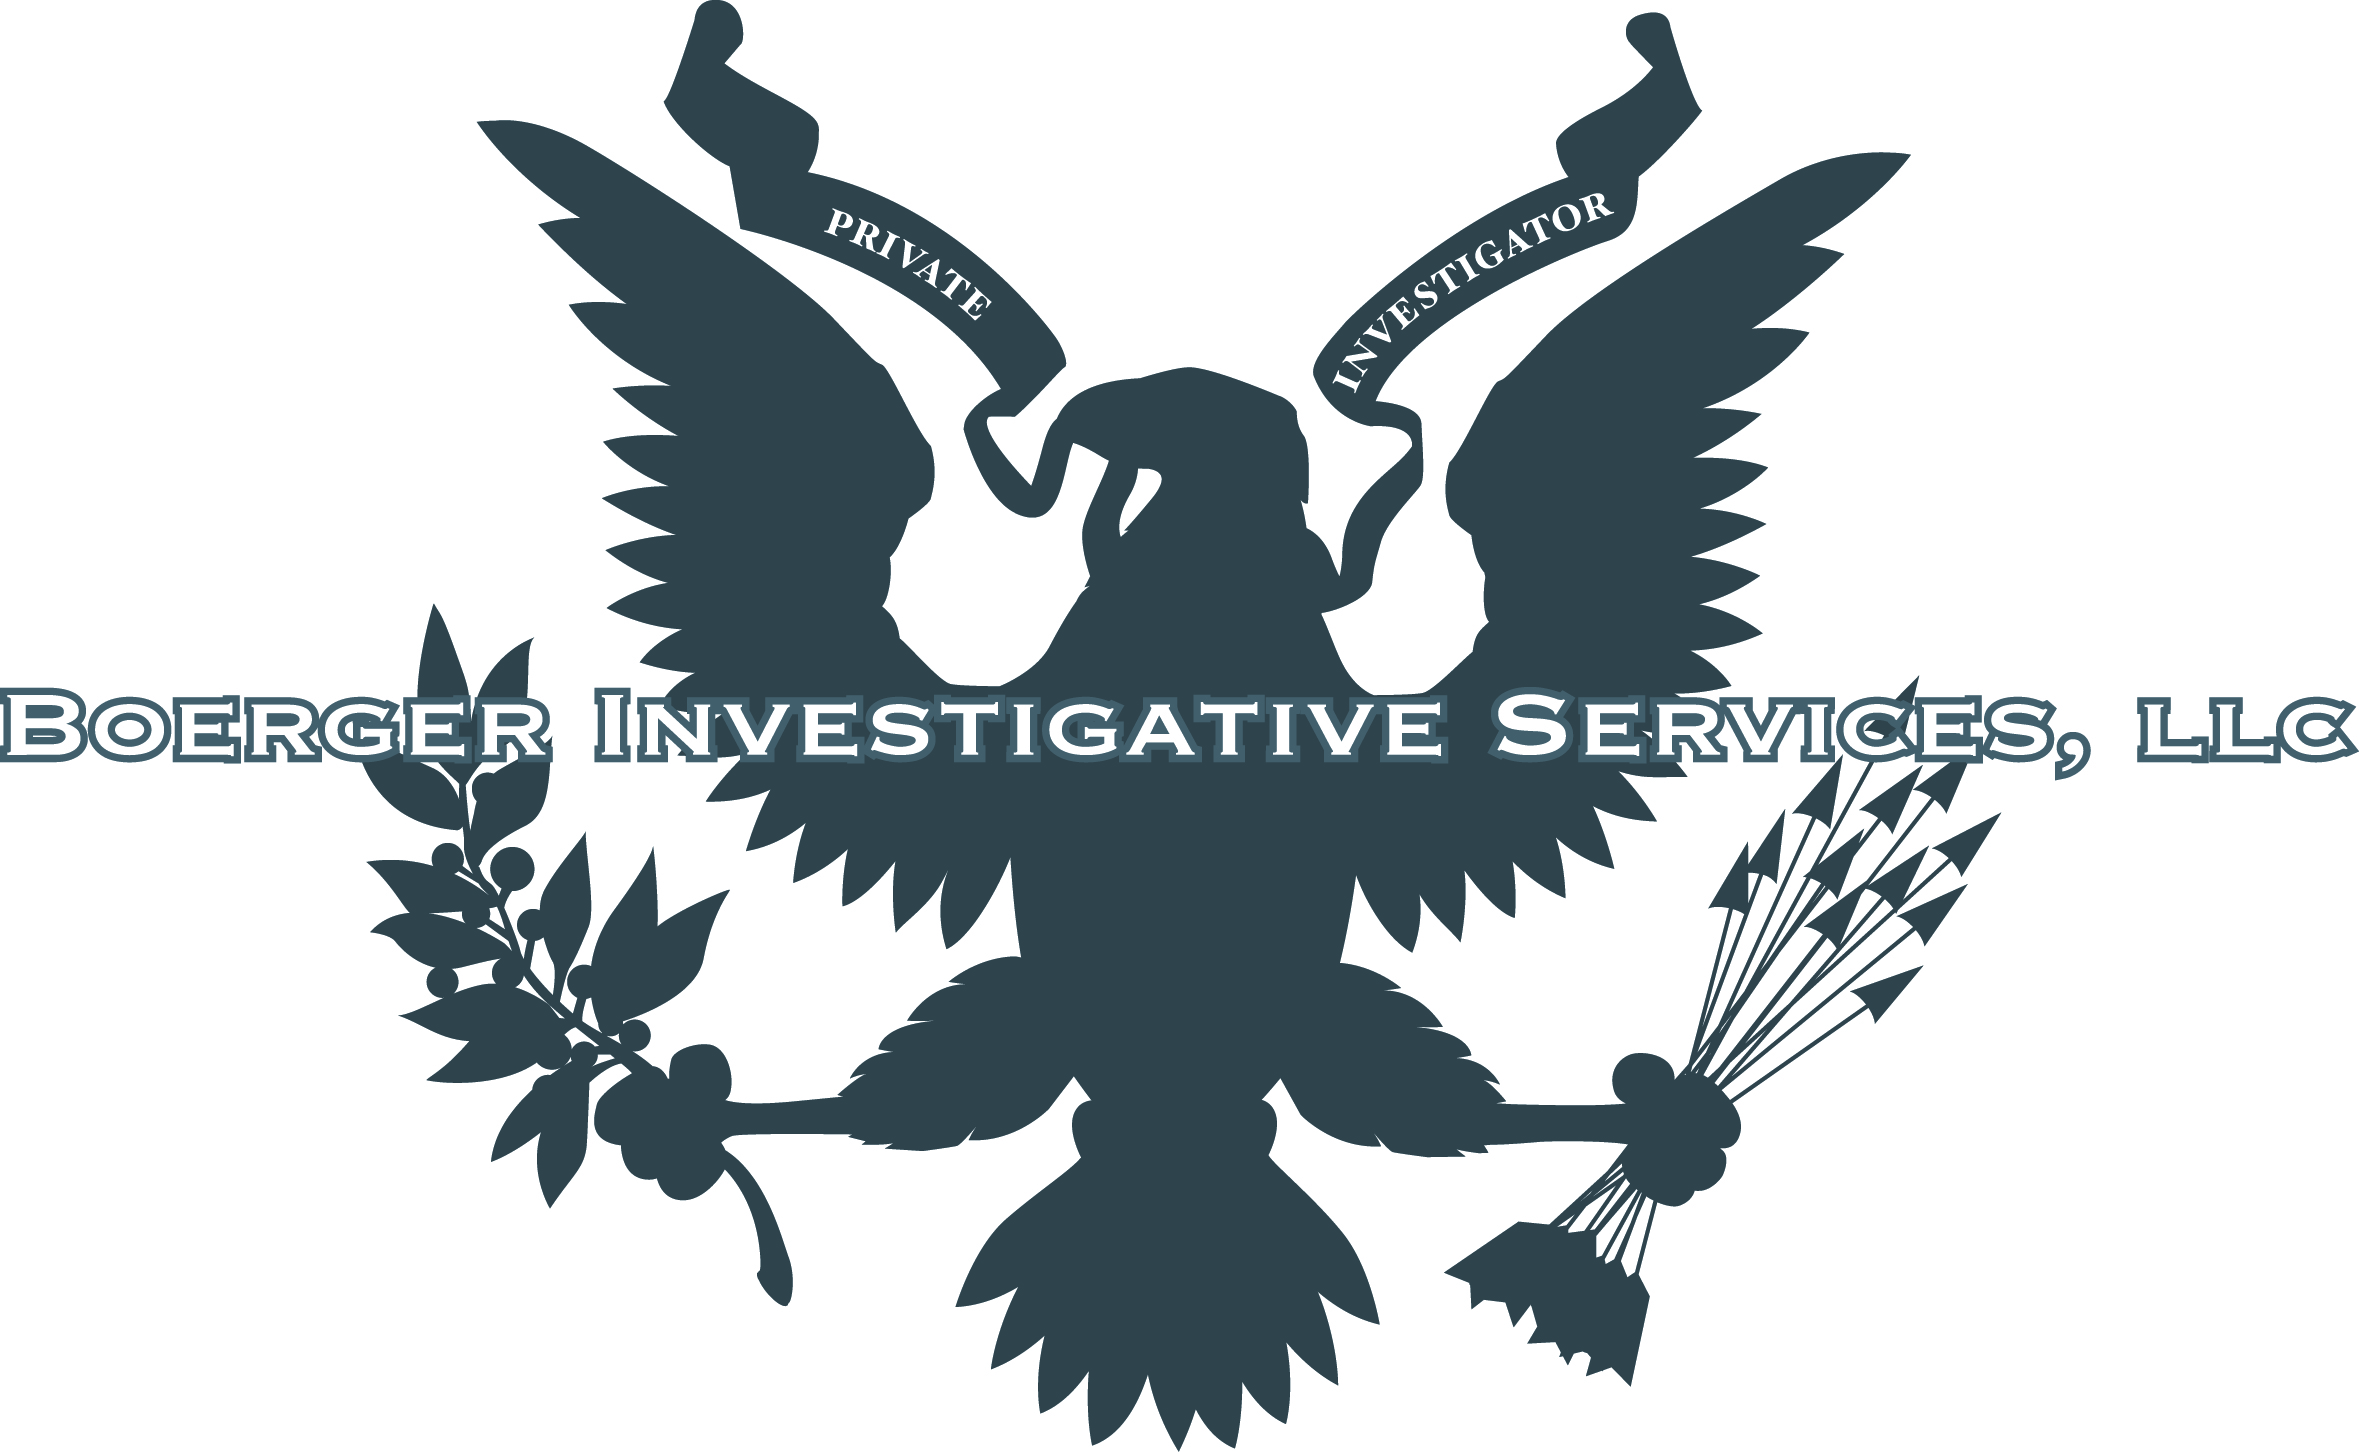 Boerger Investigative Services, LLC logo